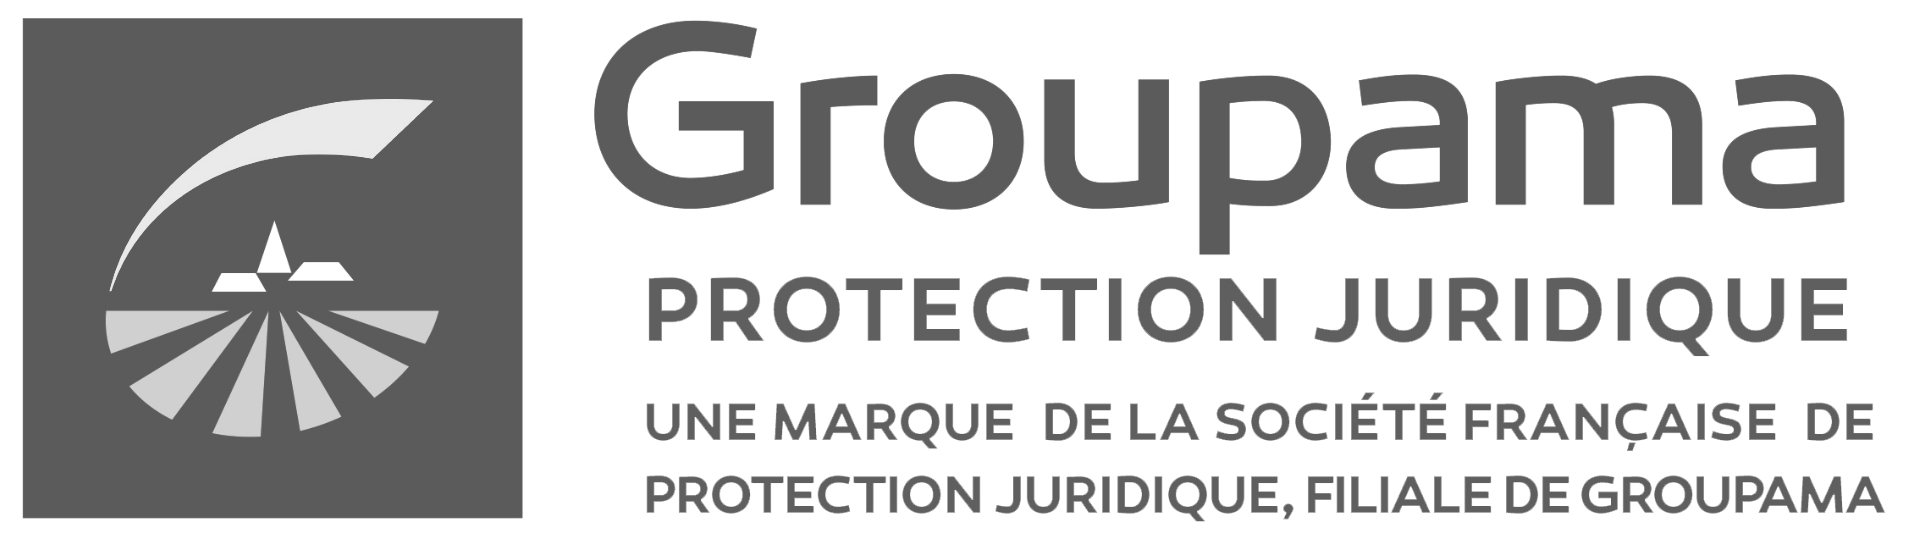 GROUPAMA PROTECTION JURIDIQUE